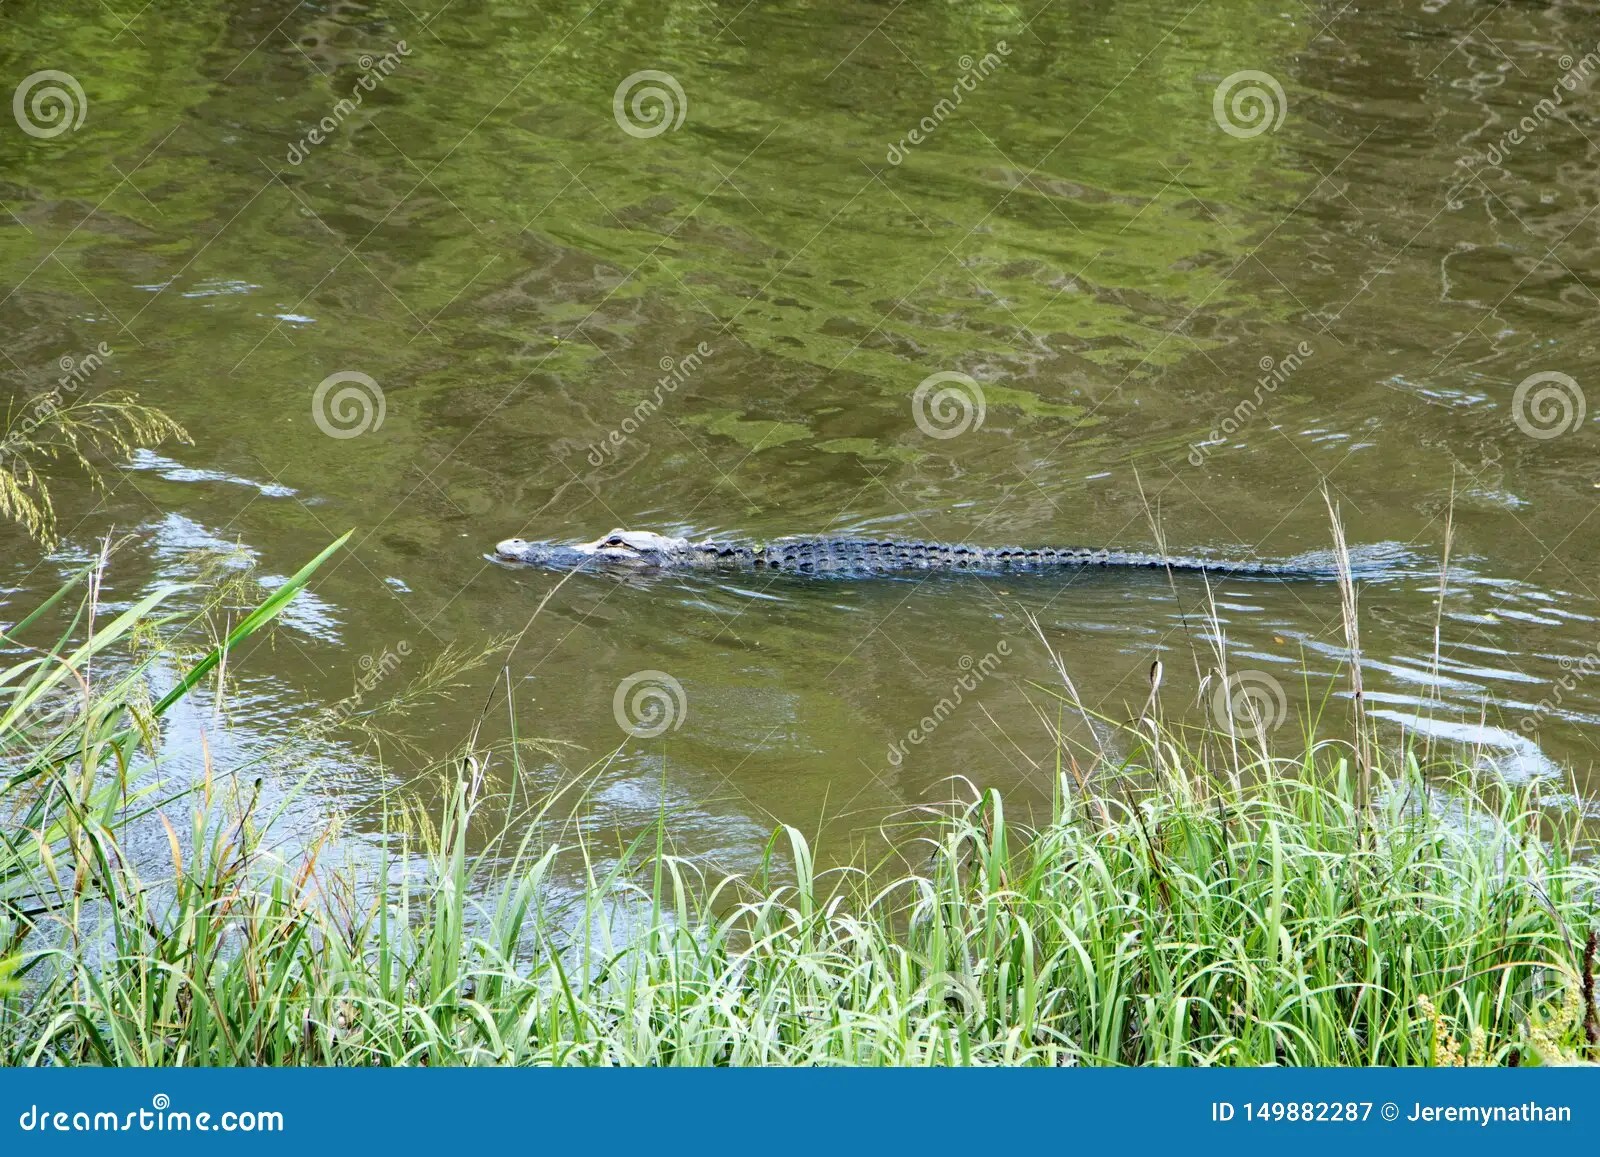 Alligator Swimming in Water Stock Image Image of alligators